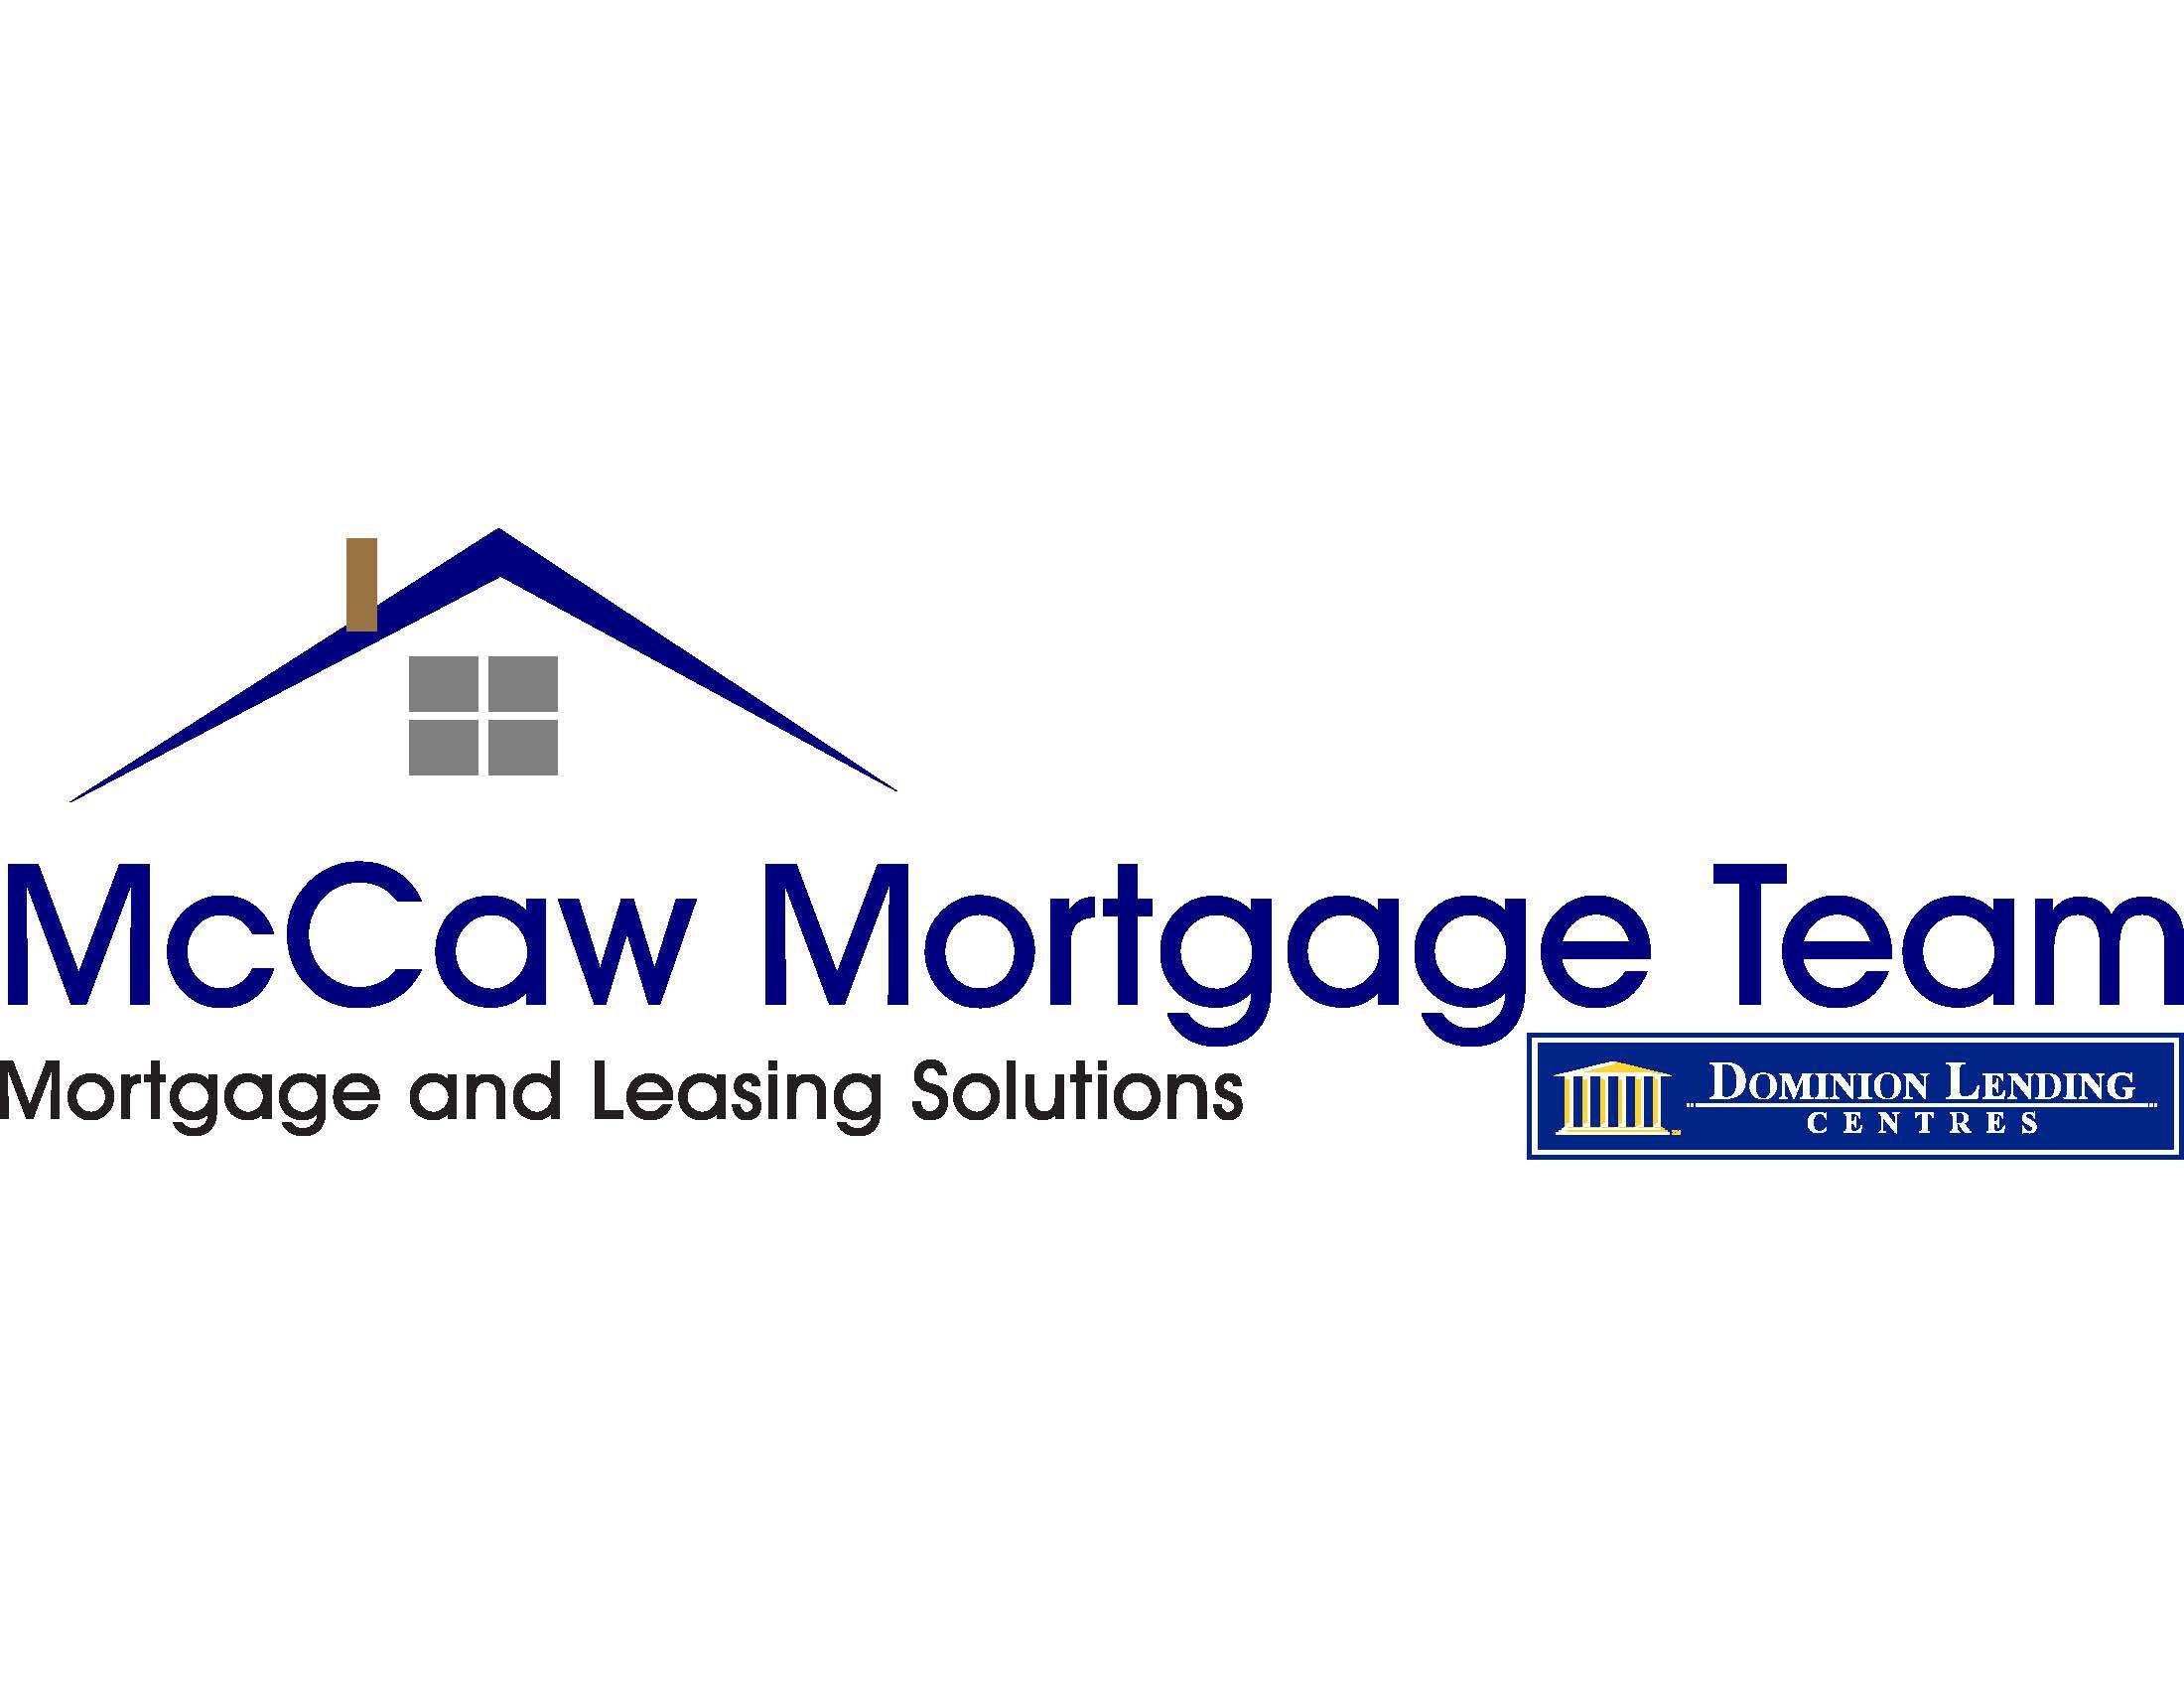 McCaw Mortgage Team